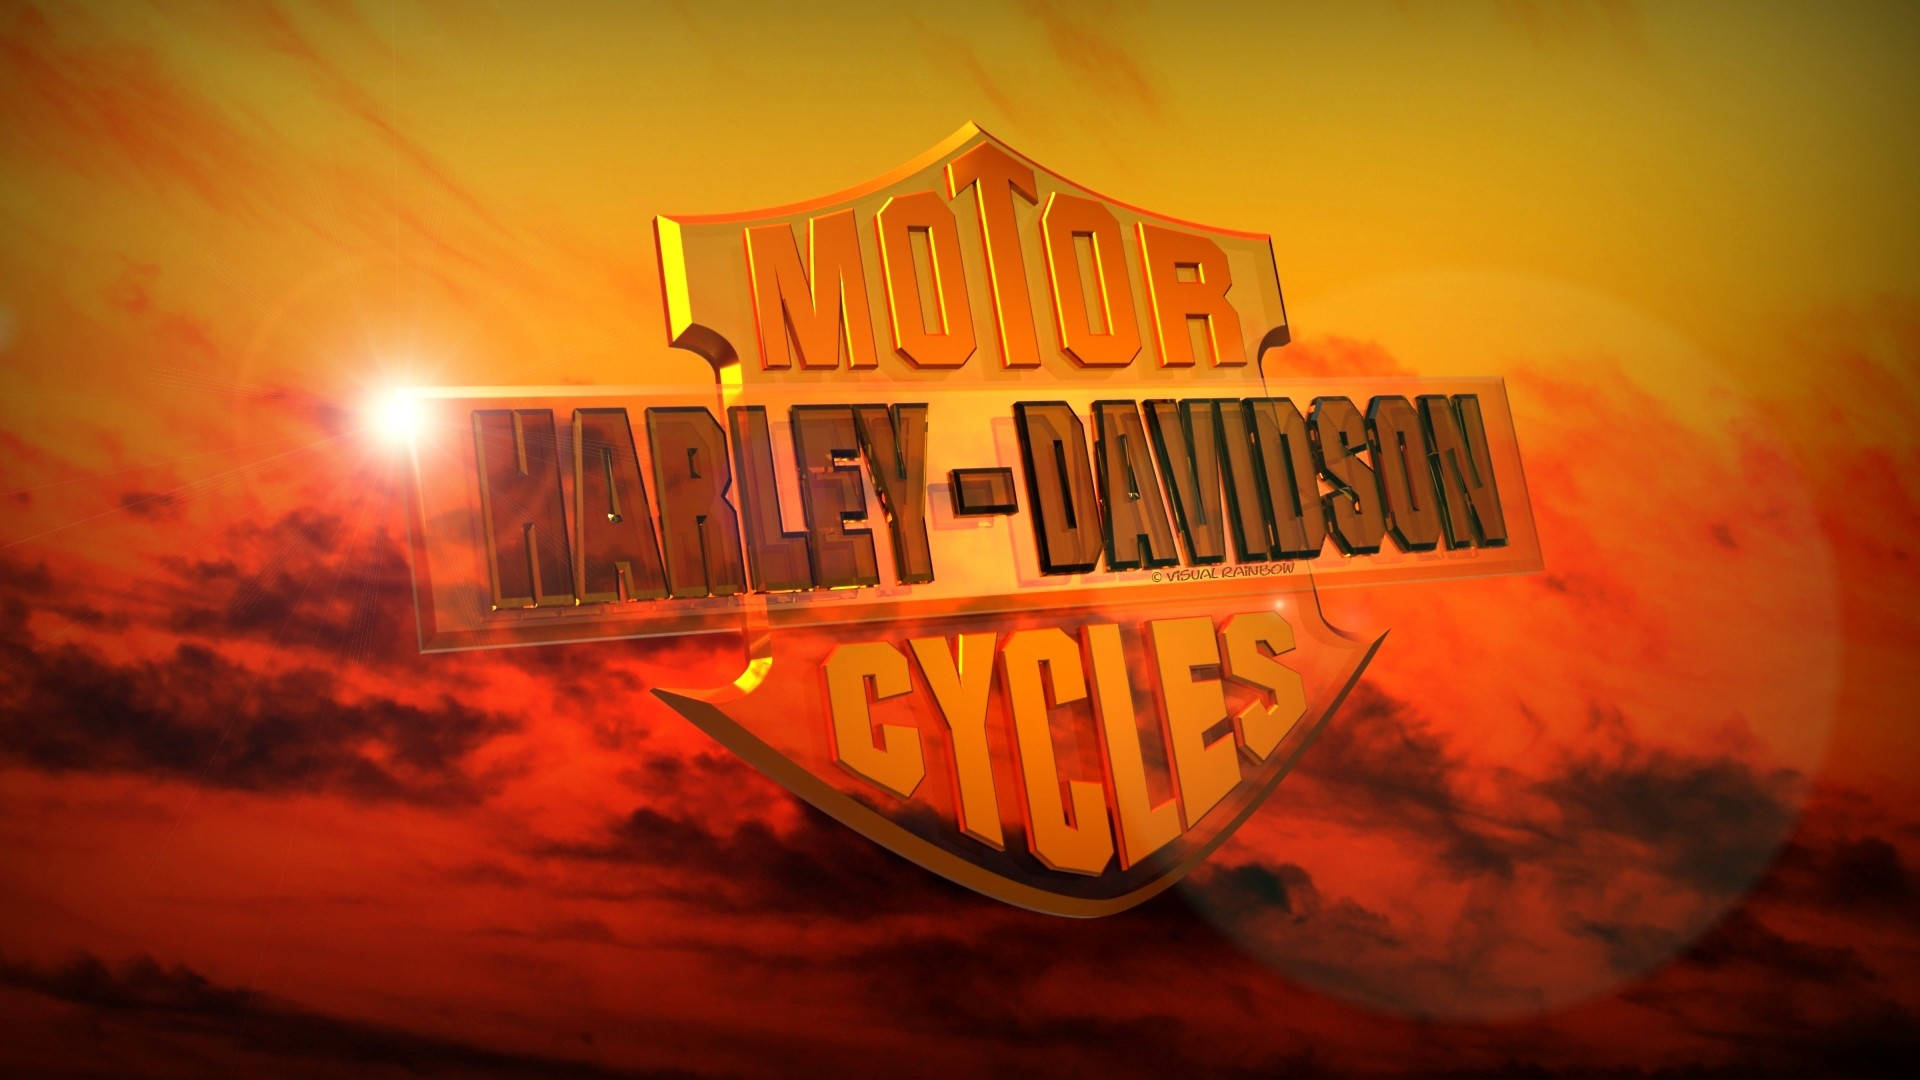 Harley Davidson Logo Sunset Art Picture